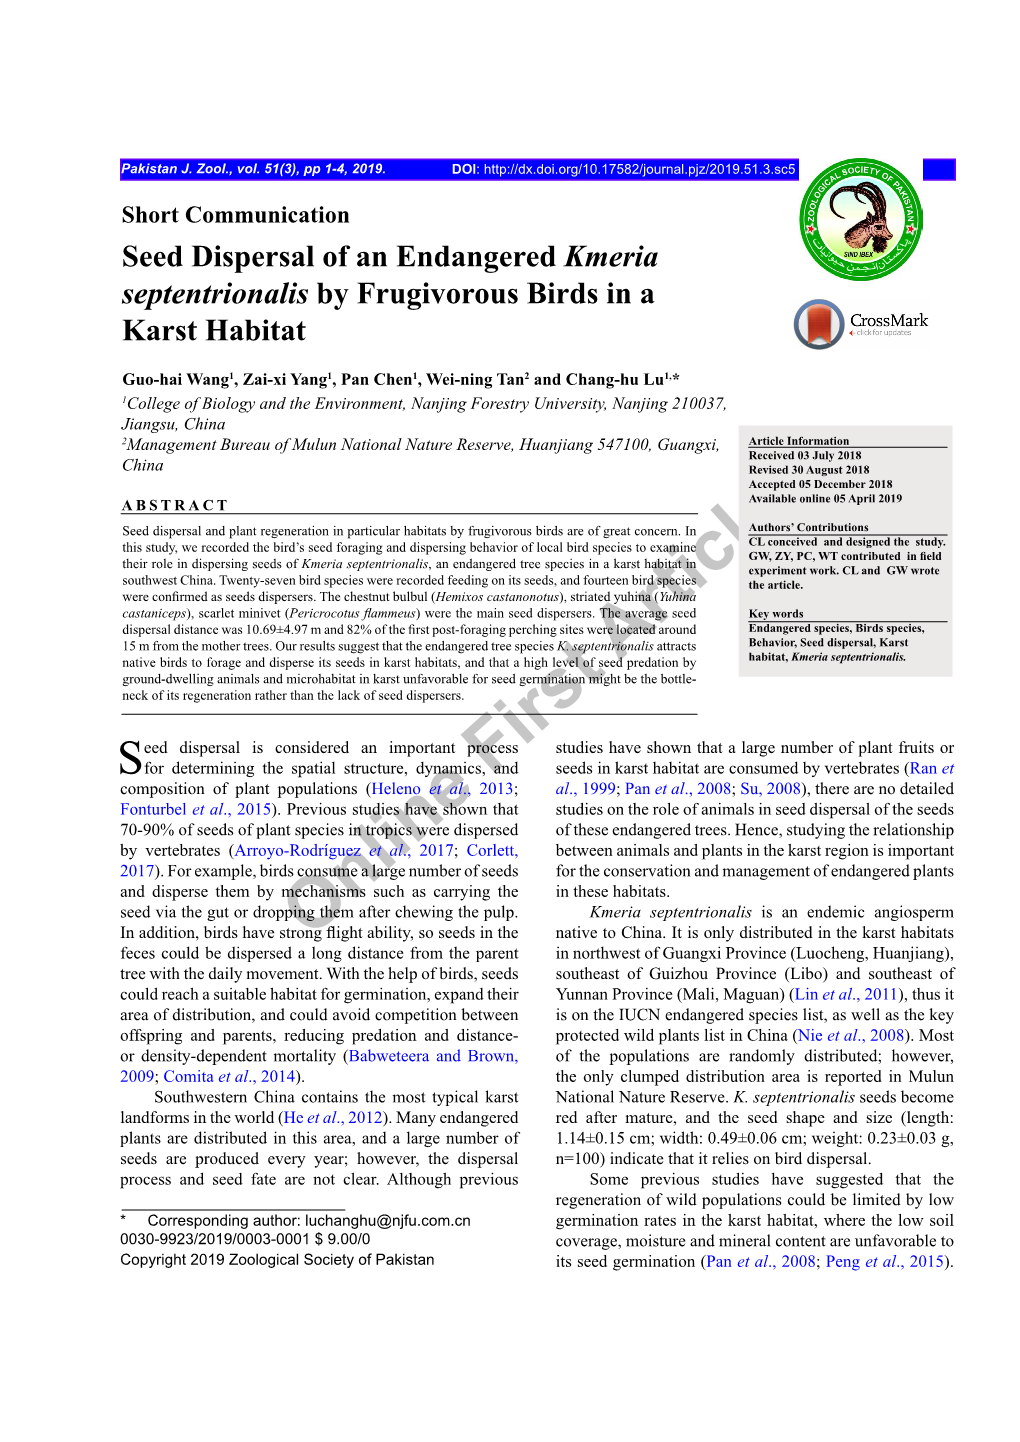 Seed Dispersal of an Endangered Kmeria Septentrionalis by Frugivorous Birds in a Karst Habitat